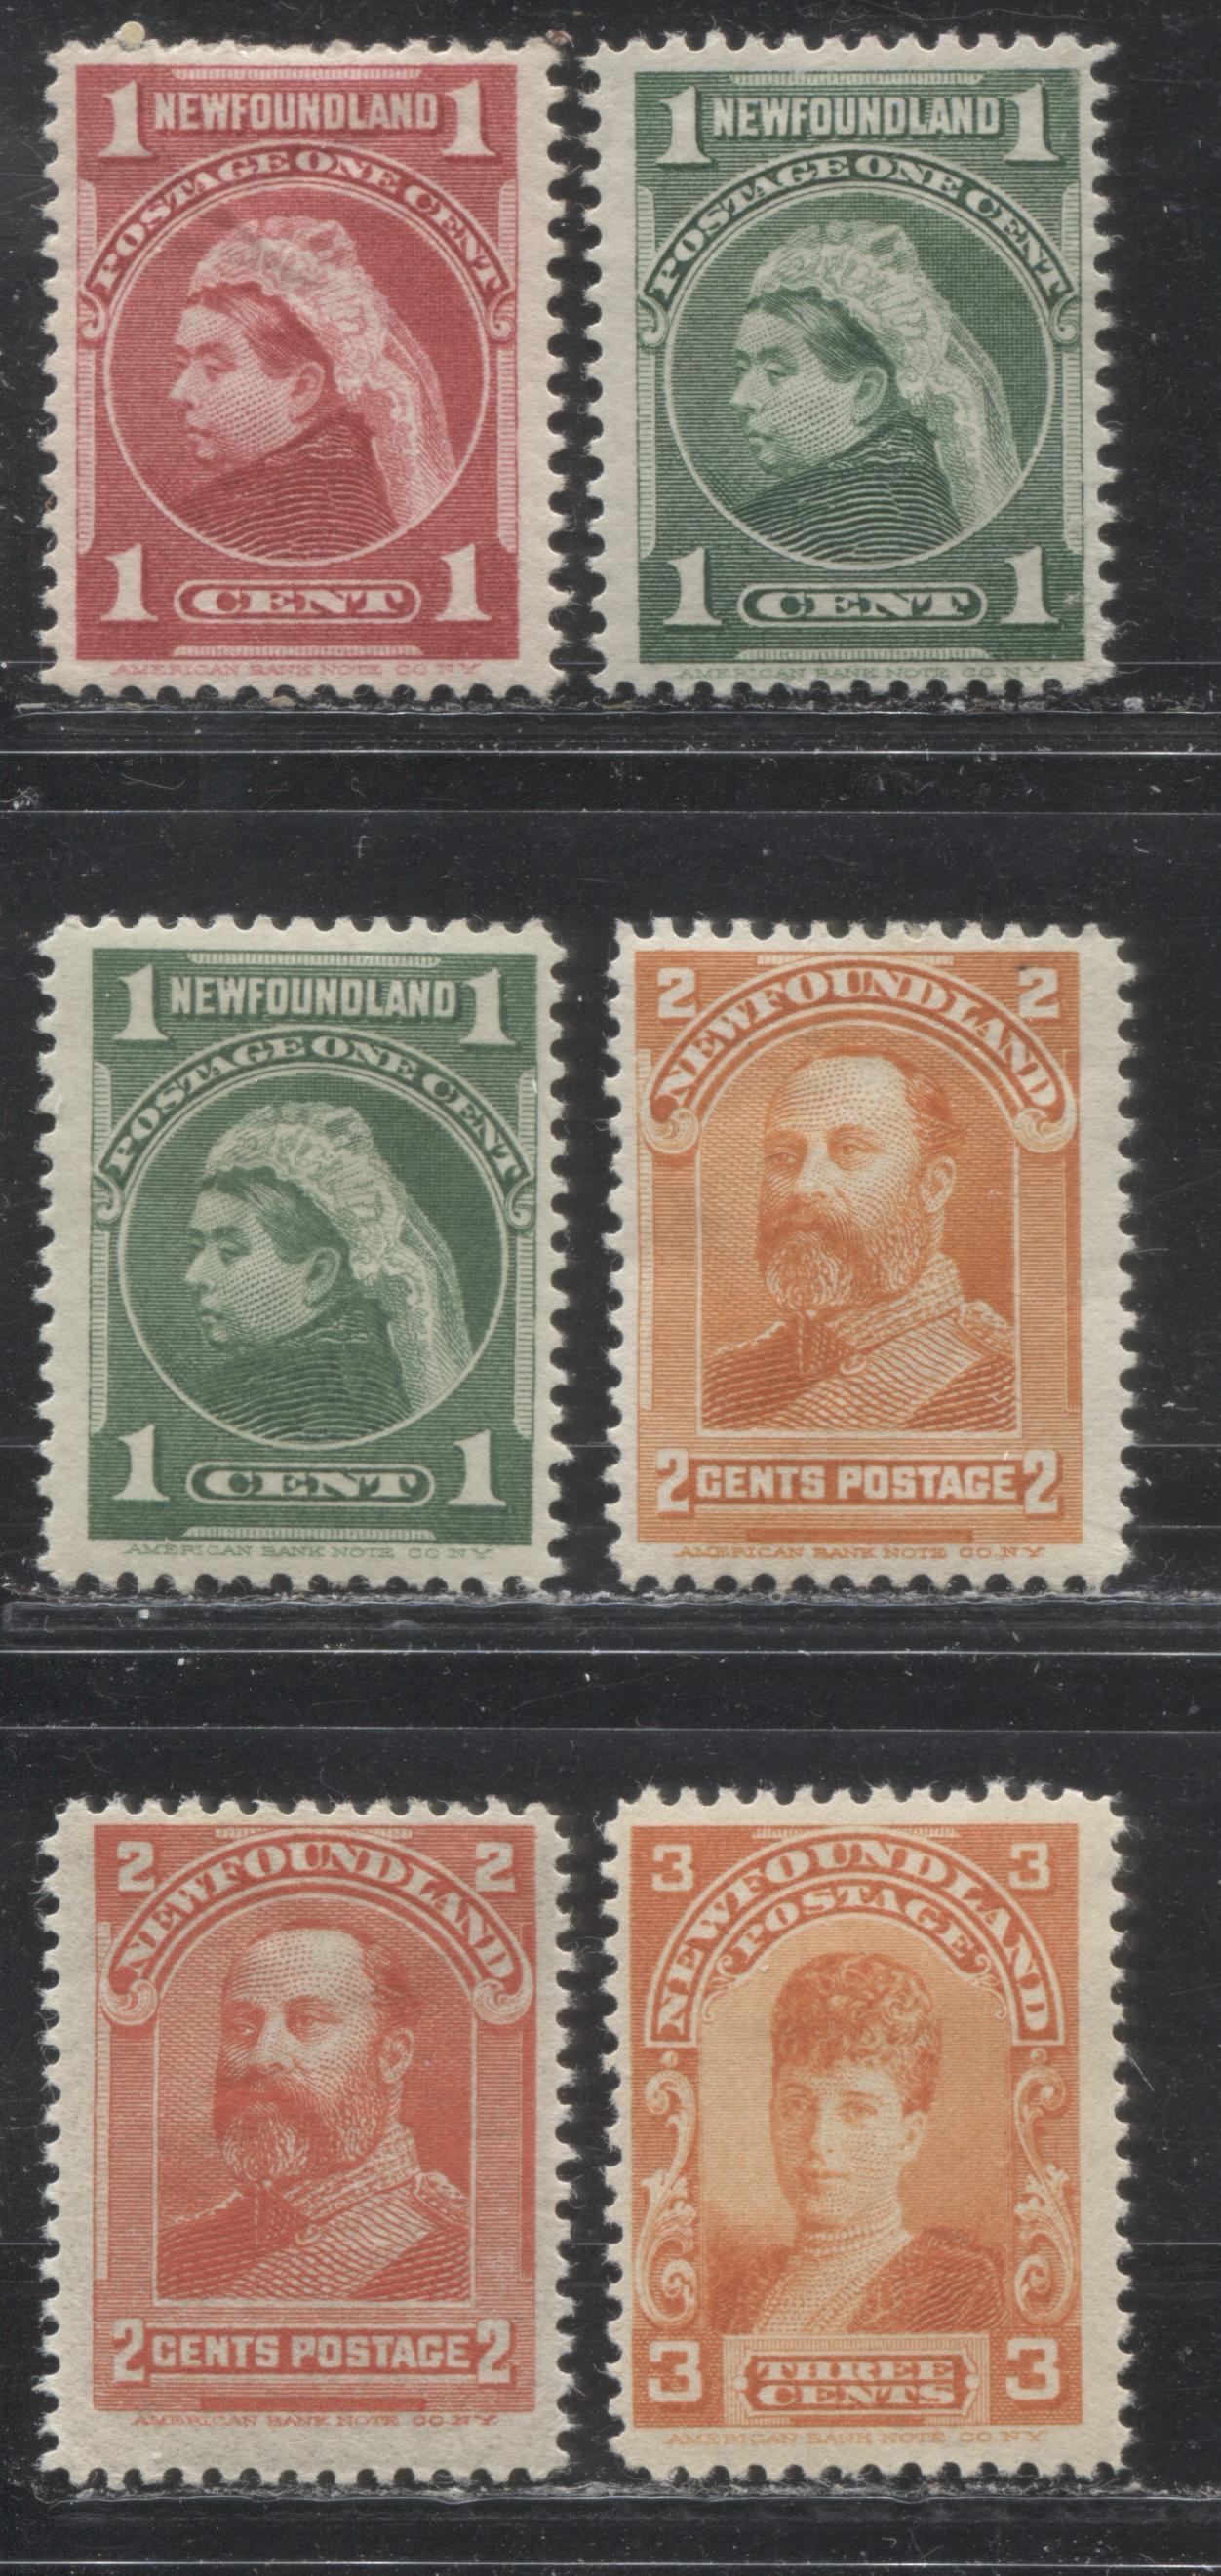 Lot 96 Newfoundland #79,80,81,82,83 1c - 3c Carmine Rose - Orange Queen Victoria, King Edward VII & Queen Alexandra, 1897-1901 Royal Family Issue, 6 Fine OG Singles